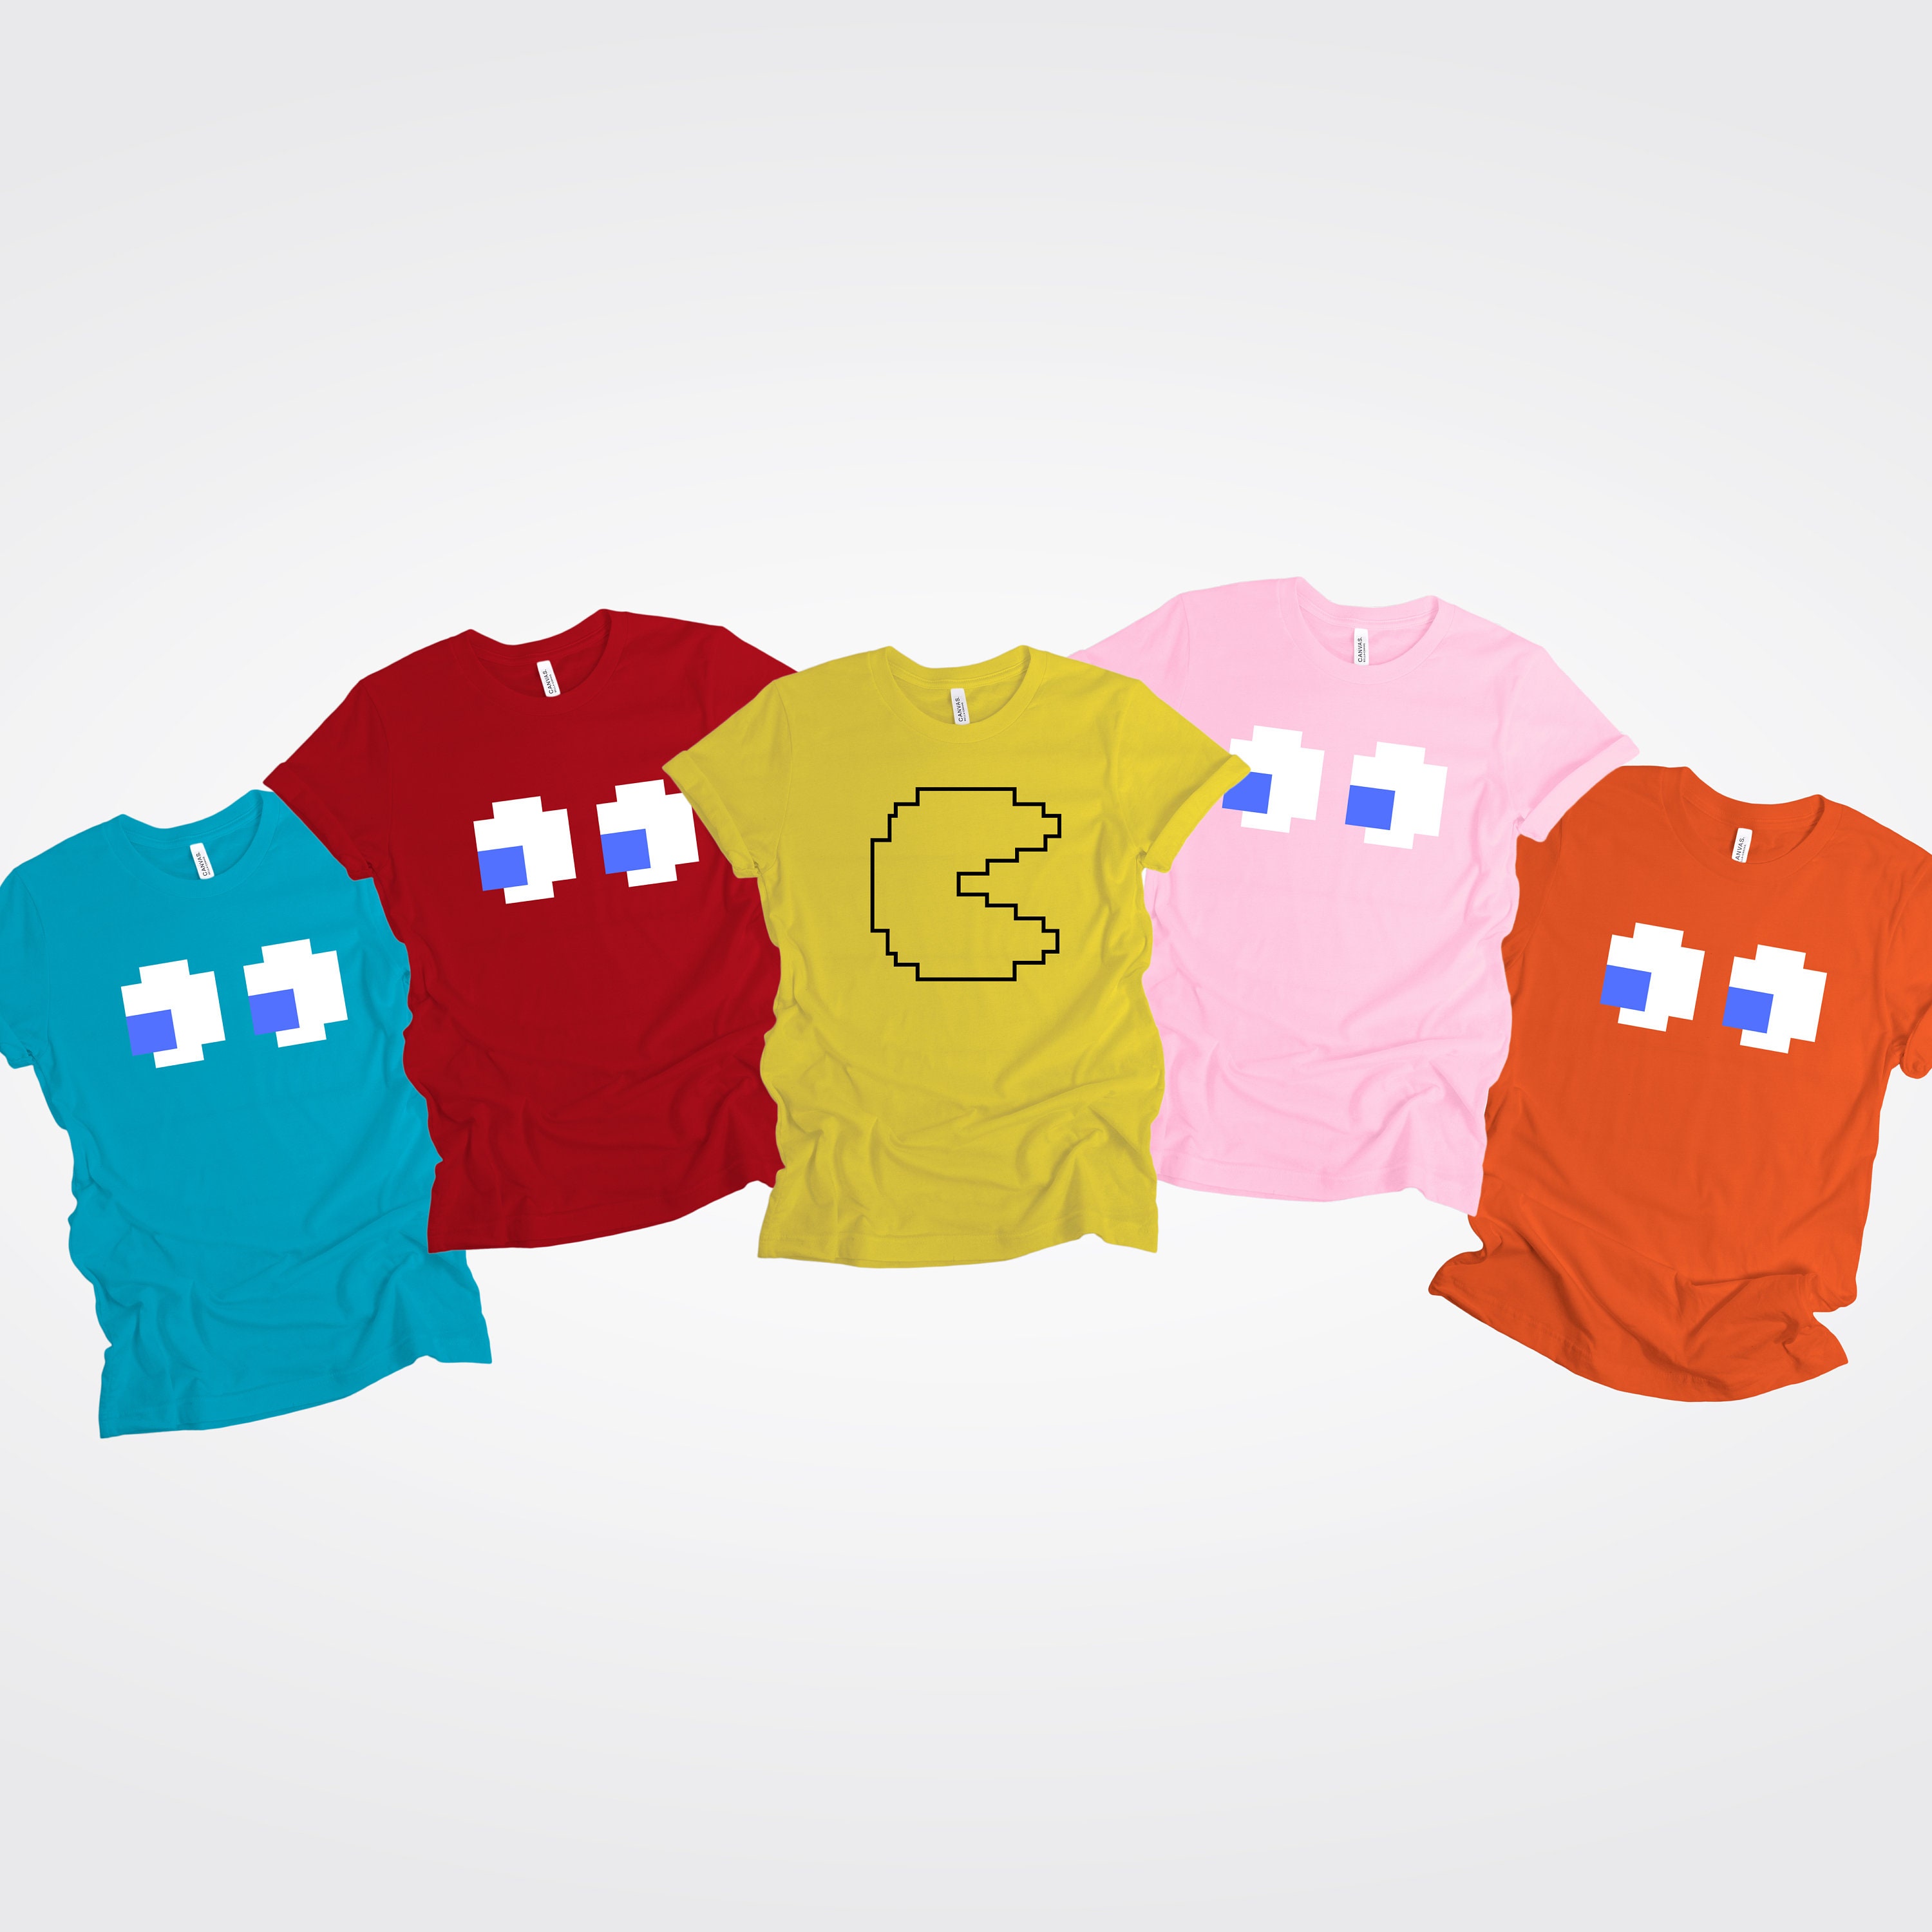 Mr. Pacman Group Costume Halloween T-shirt Family Costume - Etsy